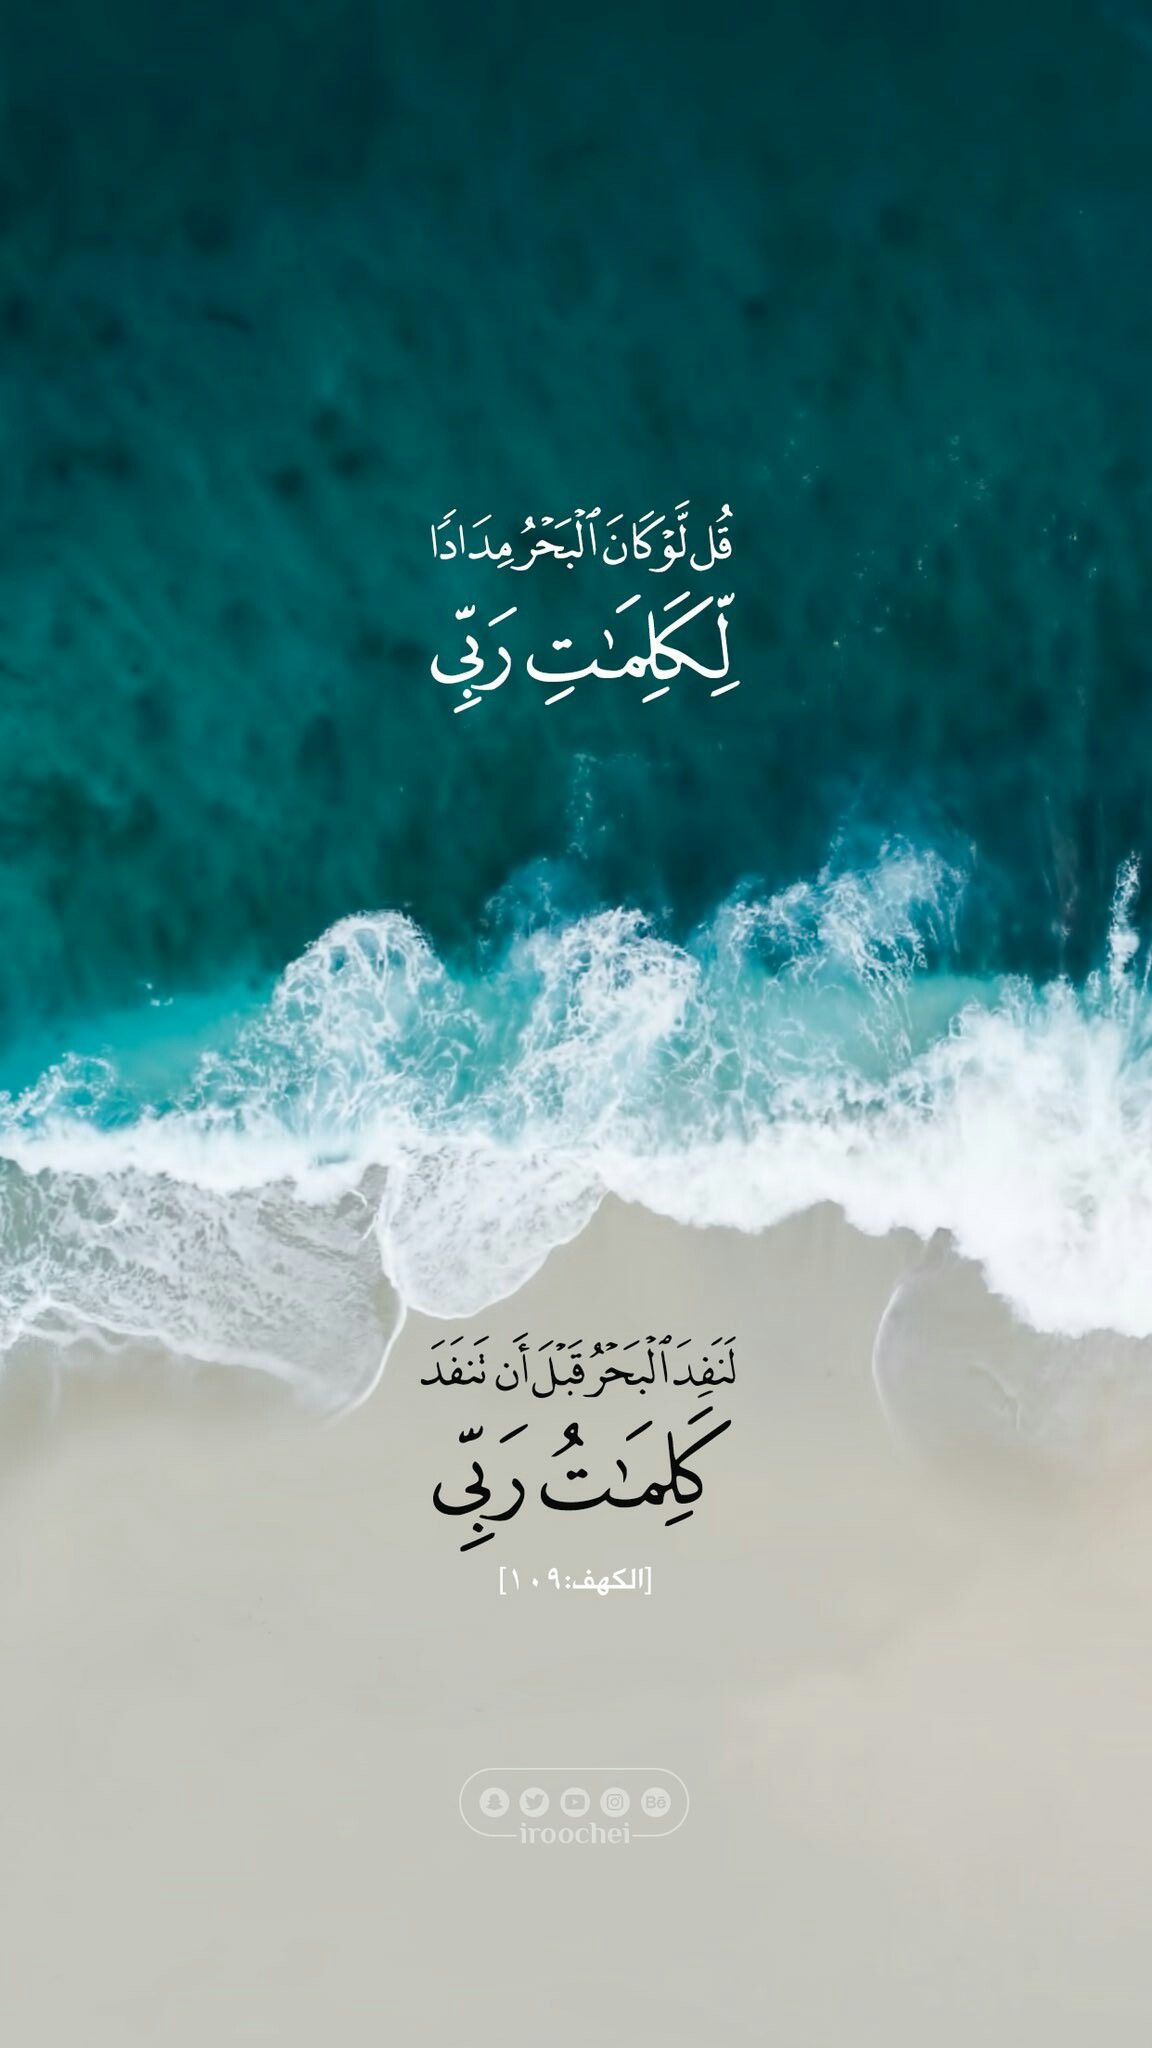 fondo de pantalla islámico iphone,texto,fuente,turquesa,cielo,ola